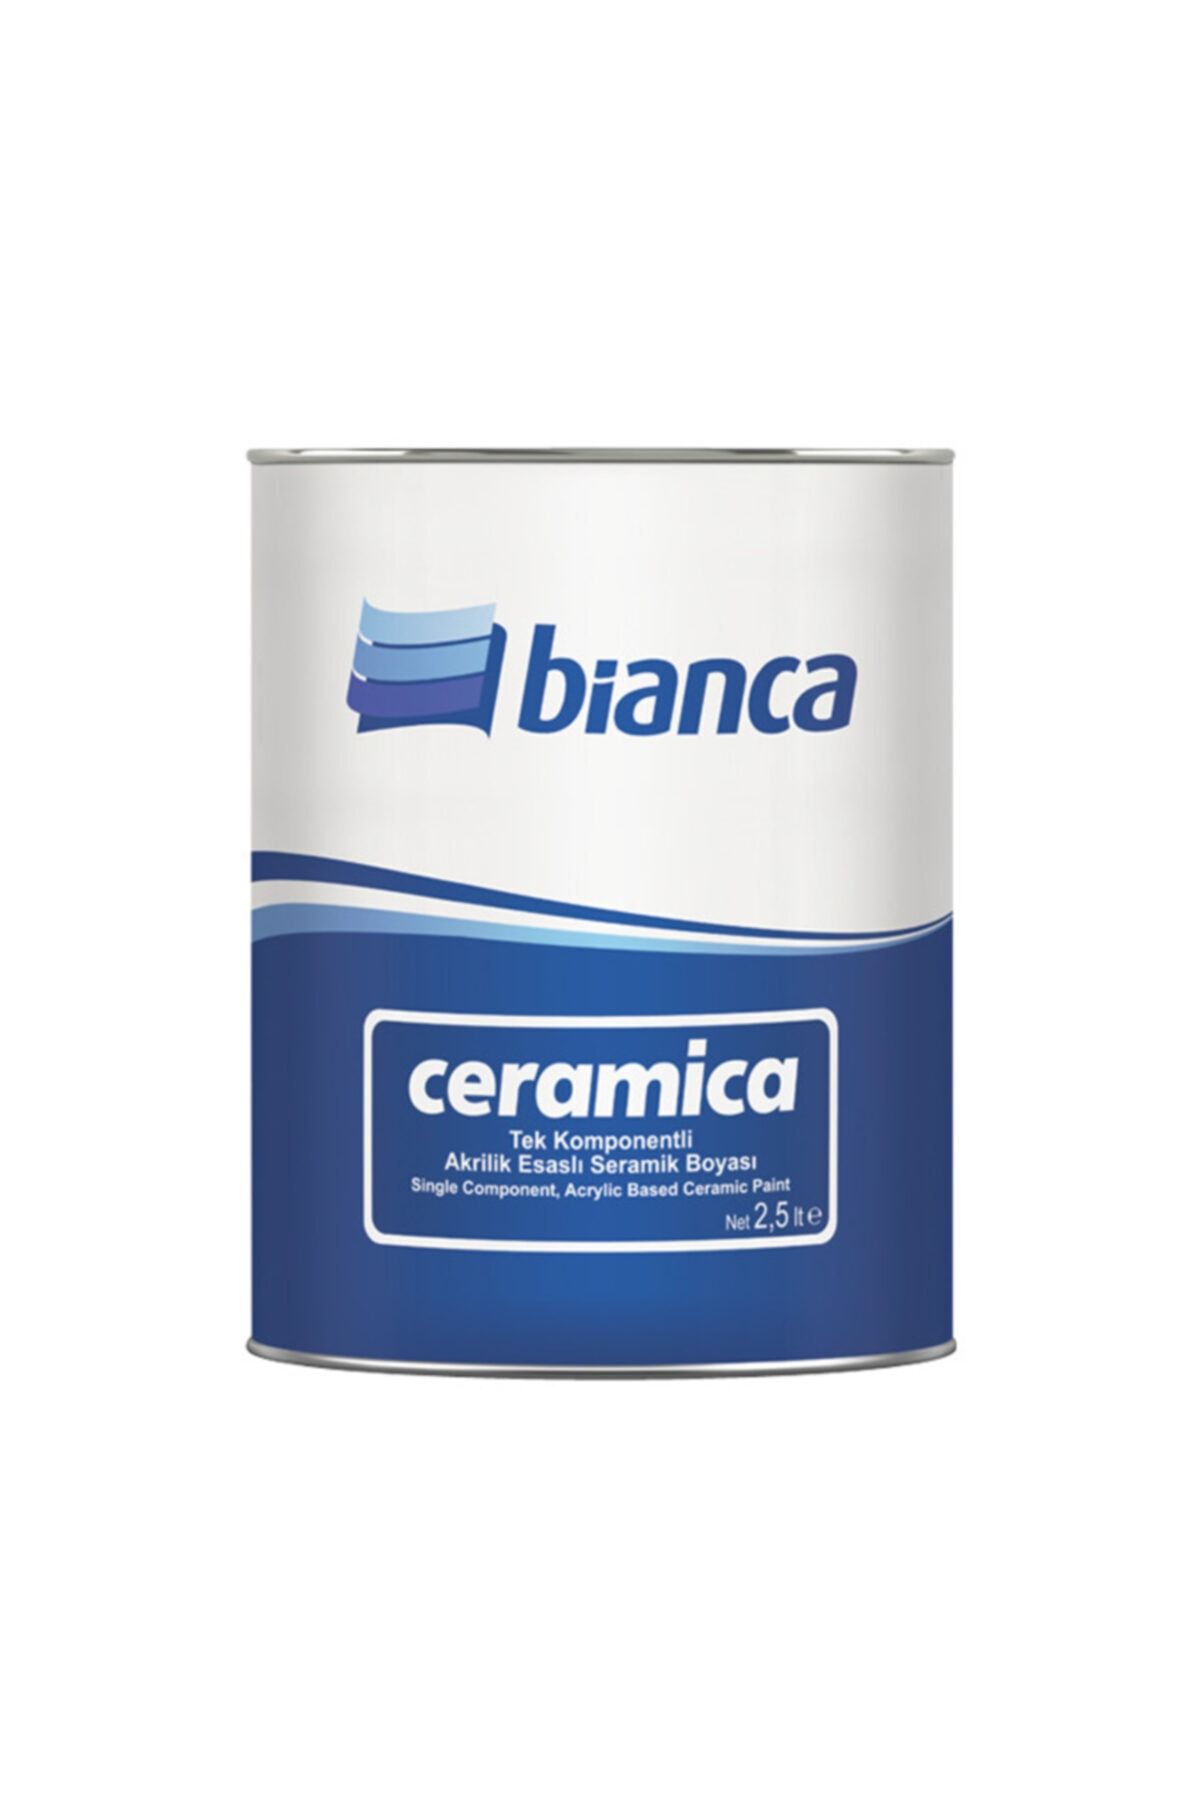 Bianca Ceramica Seramik Boyası -2,5 lt